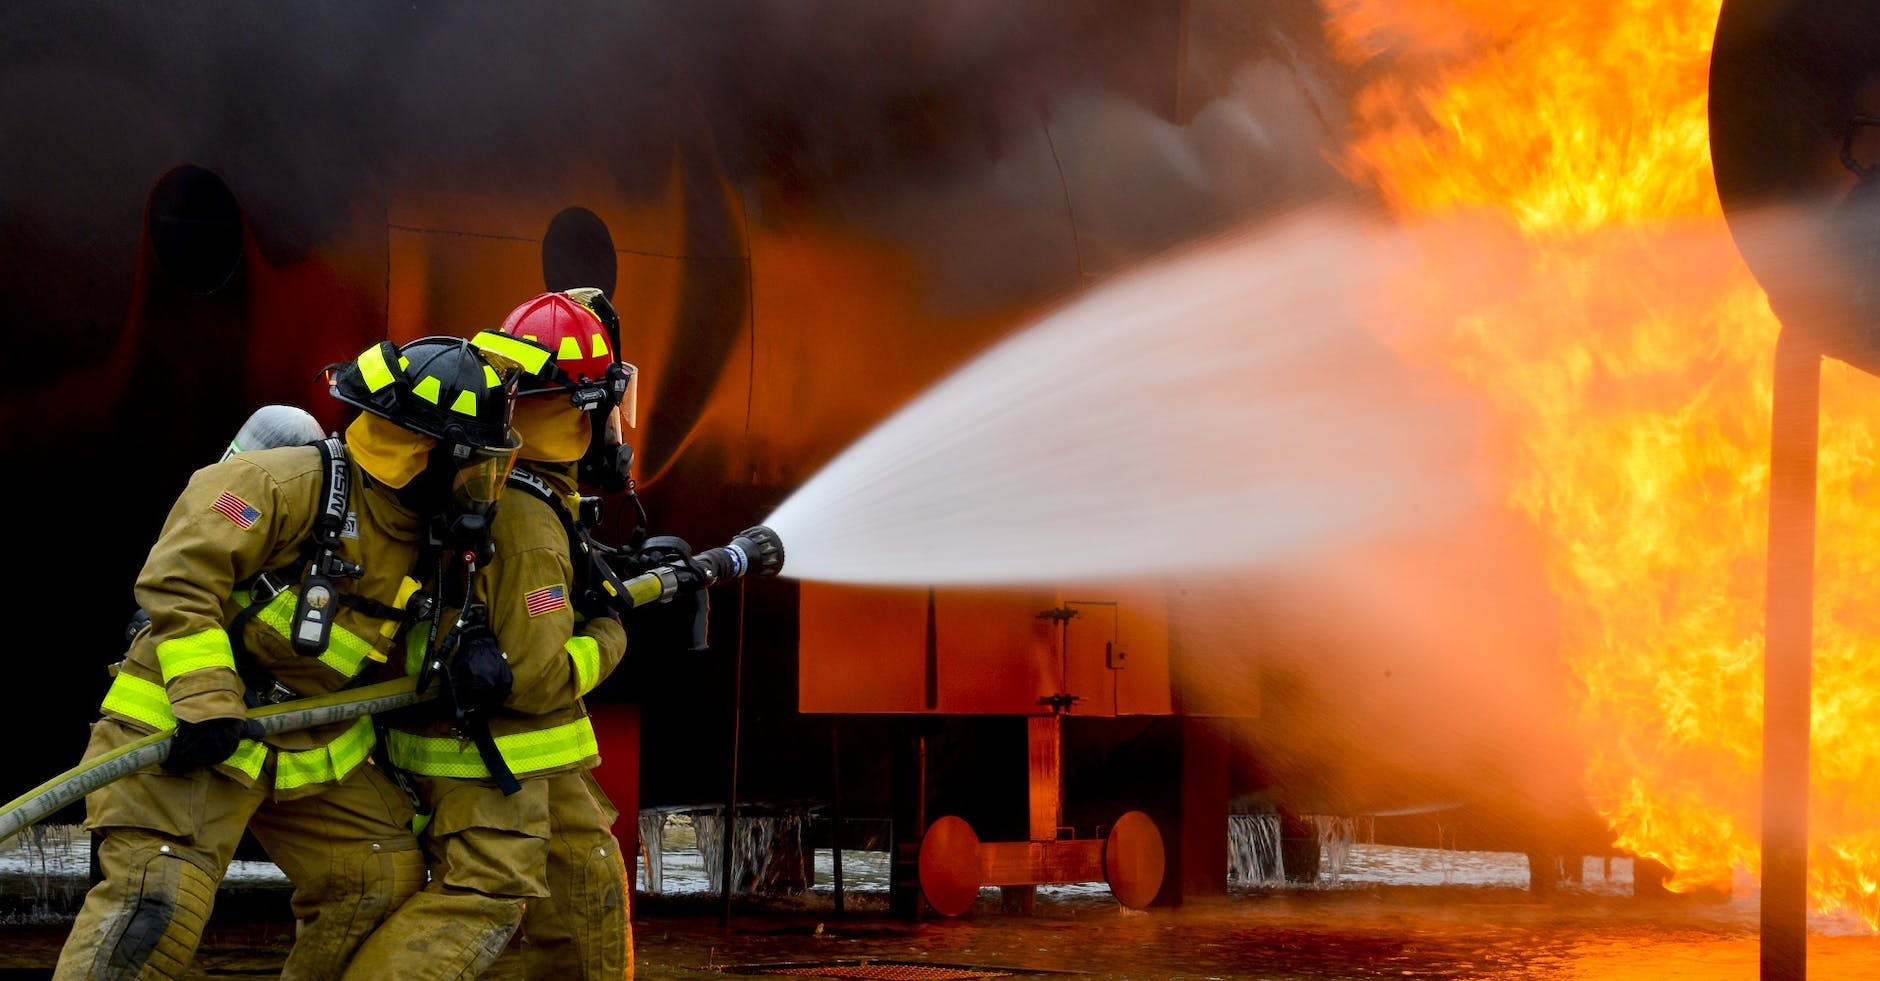 Fire Hazards and Precautions